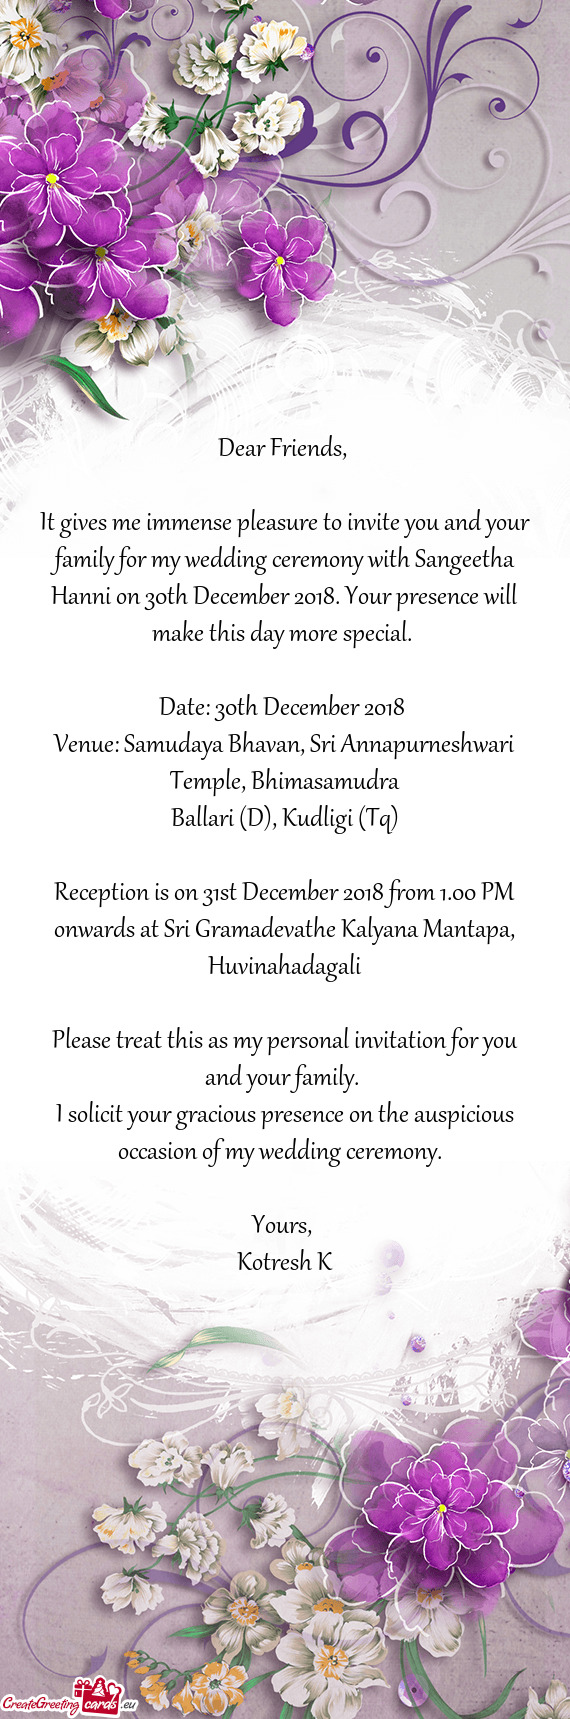 Reception is on 31st December 2018 from 1.00 PM onwards at Sri Gramadevathe Kalyana Mantapa, Huvinah